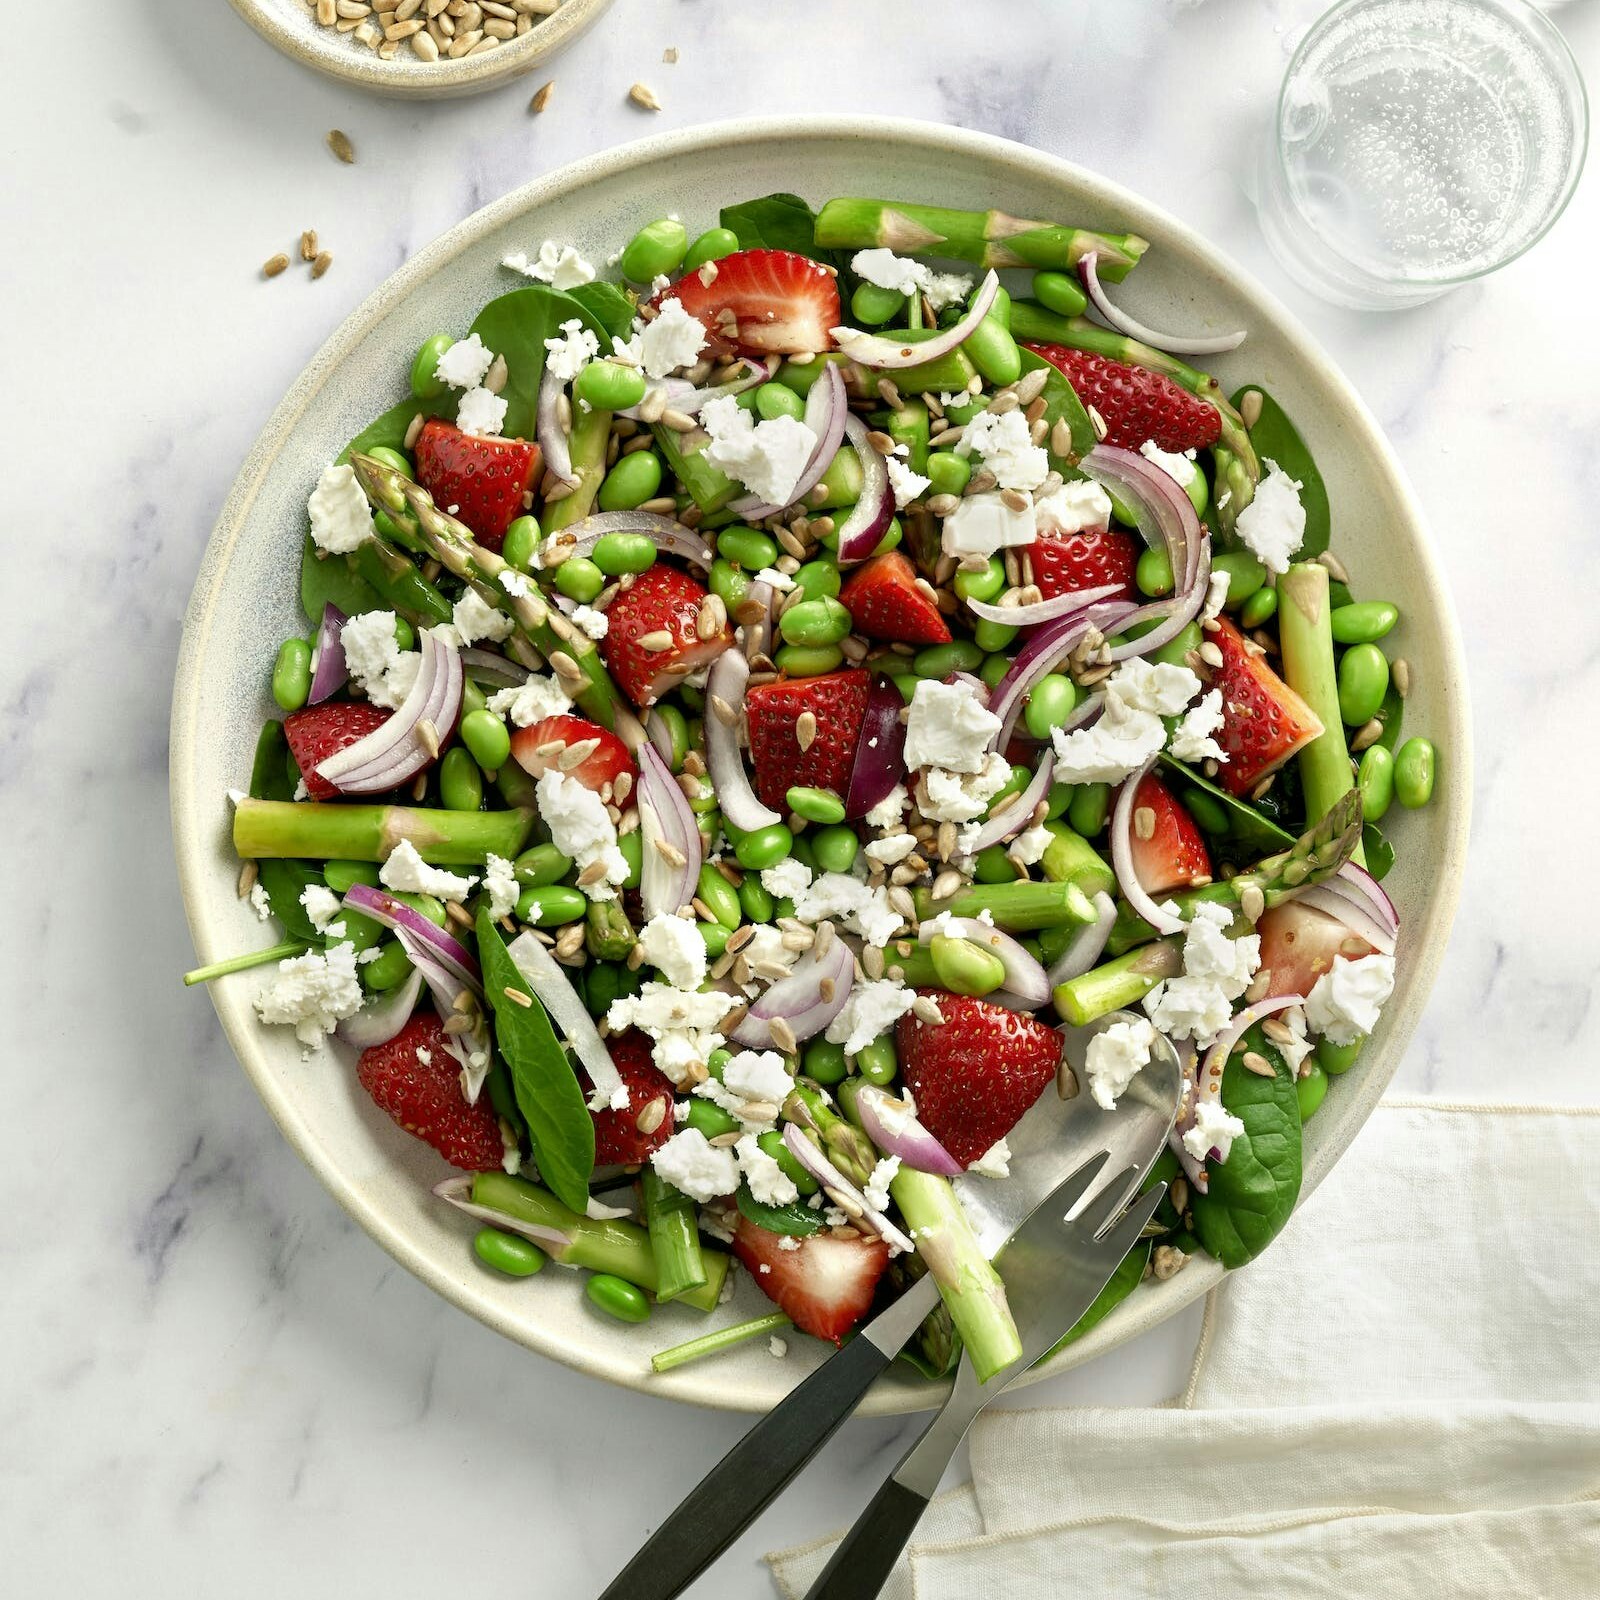 Aspargessalat med edamamebønner, jordbær og feta